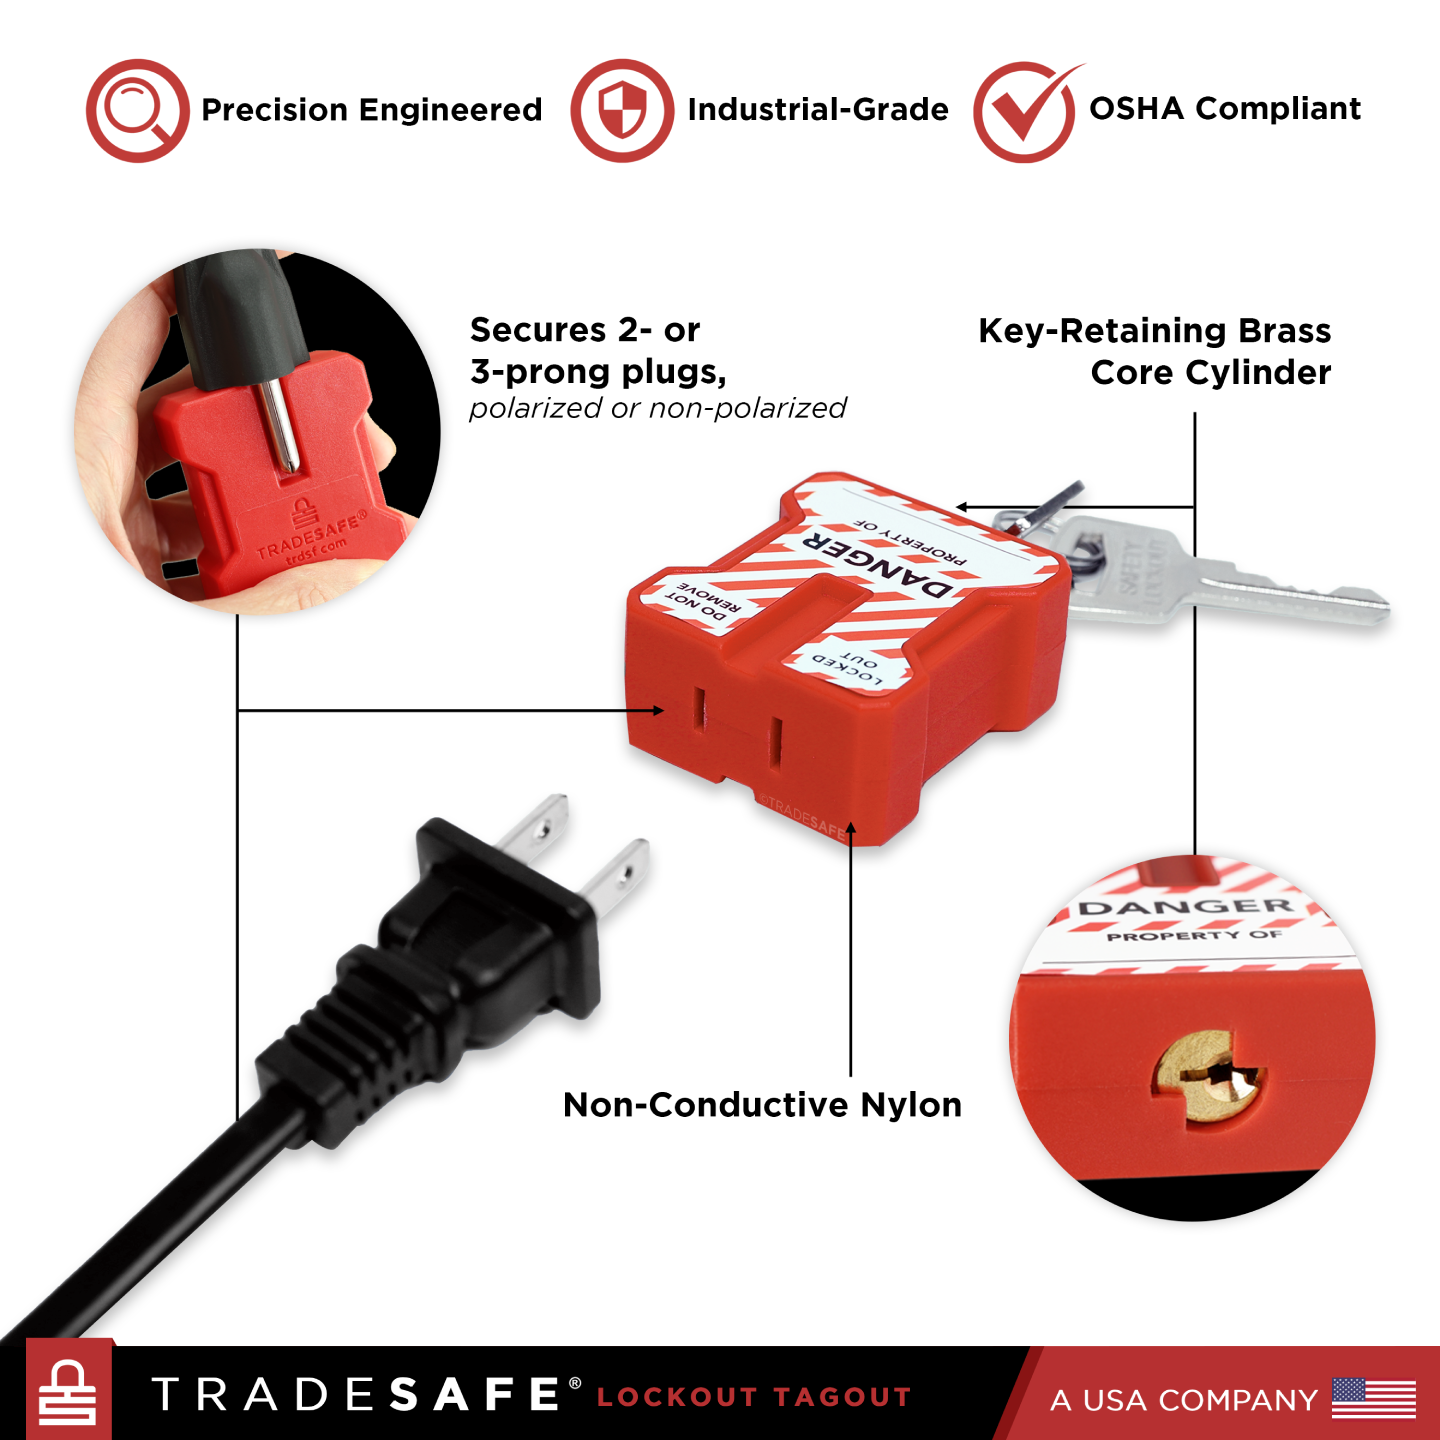 infographic: secures 2- or 3-prong plugs, polarized or non-polarized. Key-retaining brass core, non-conductive nylon